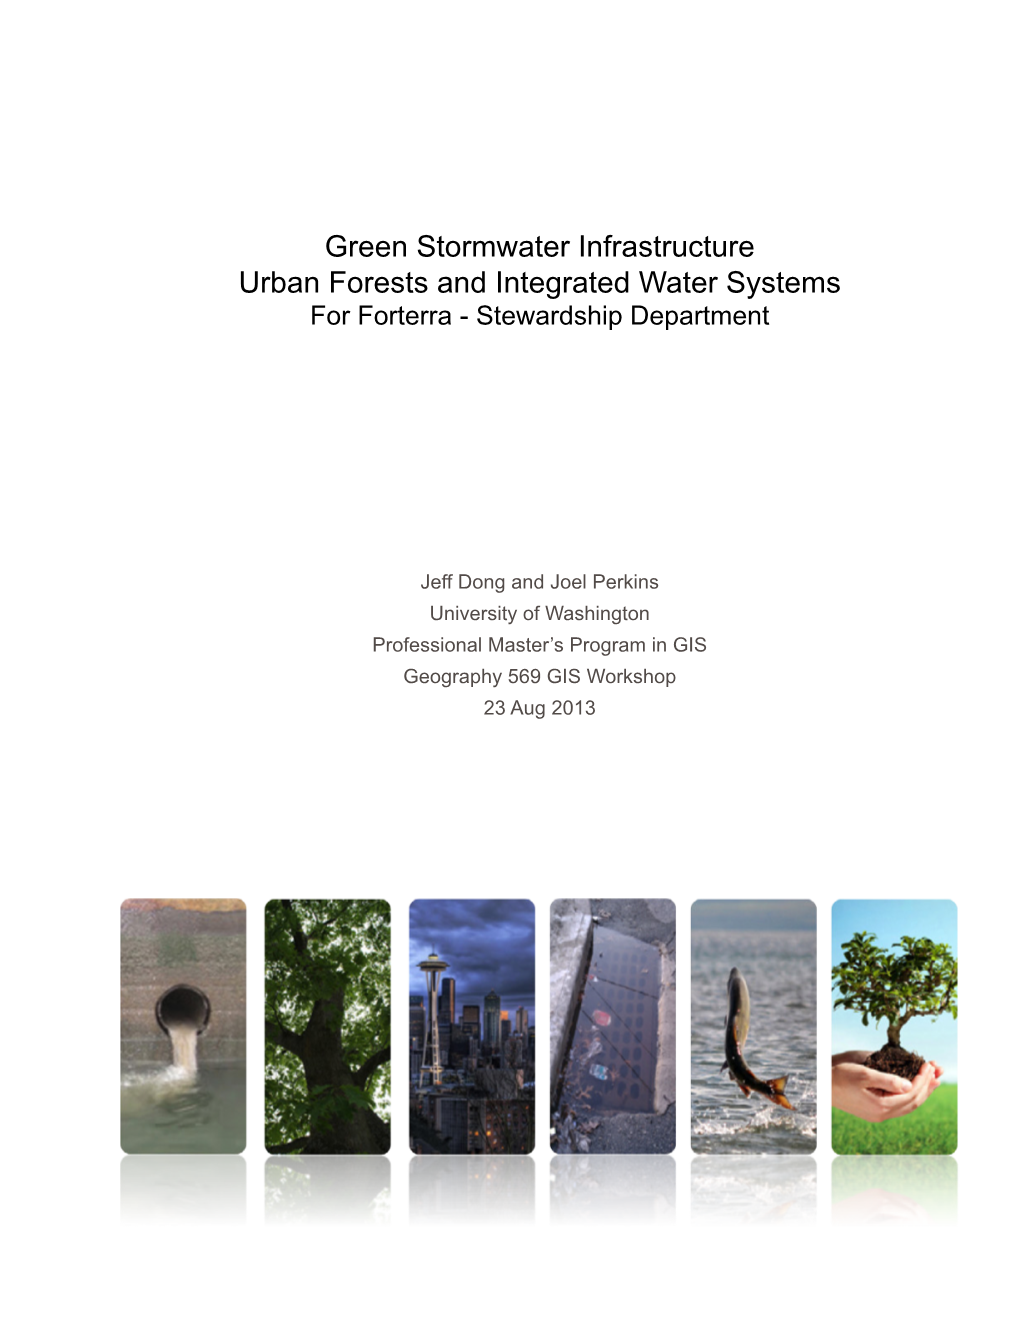 Green Stormwater Infrastructure, Urban